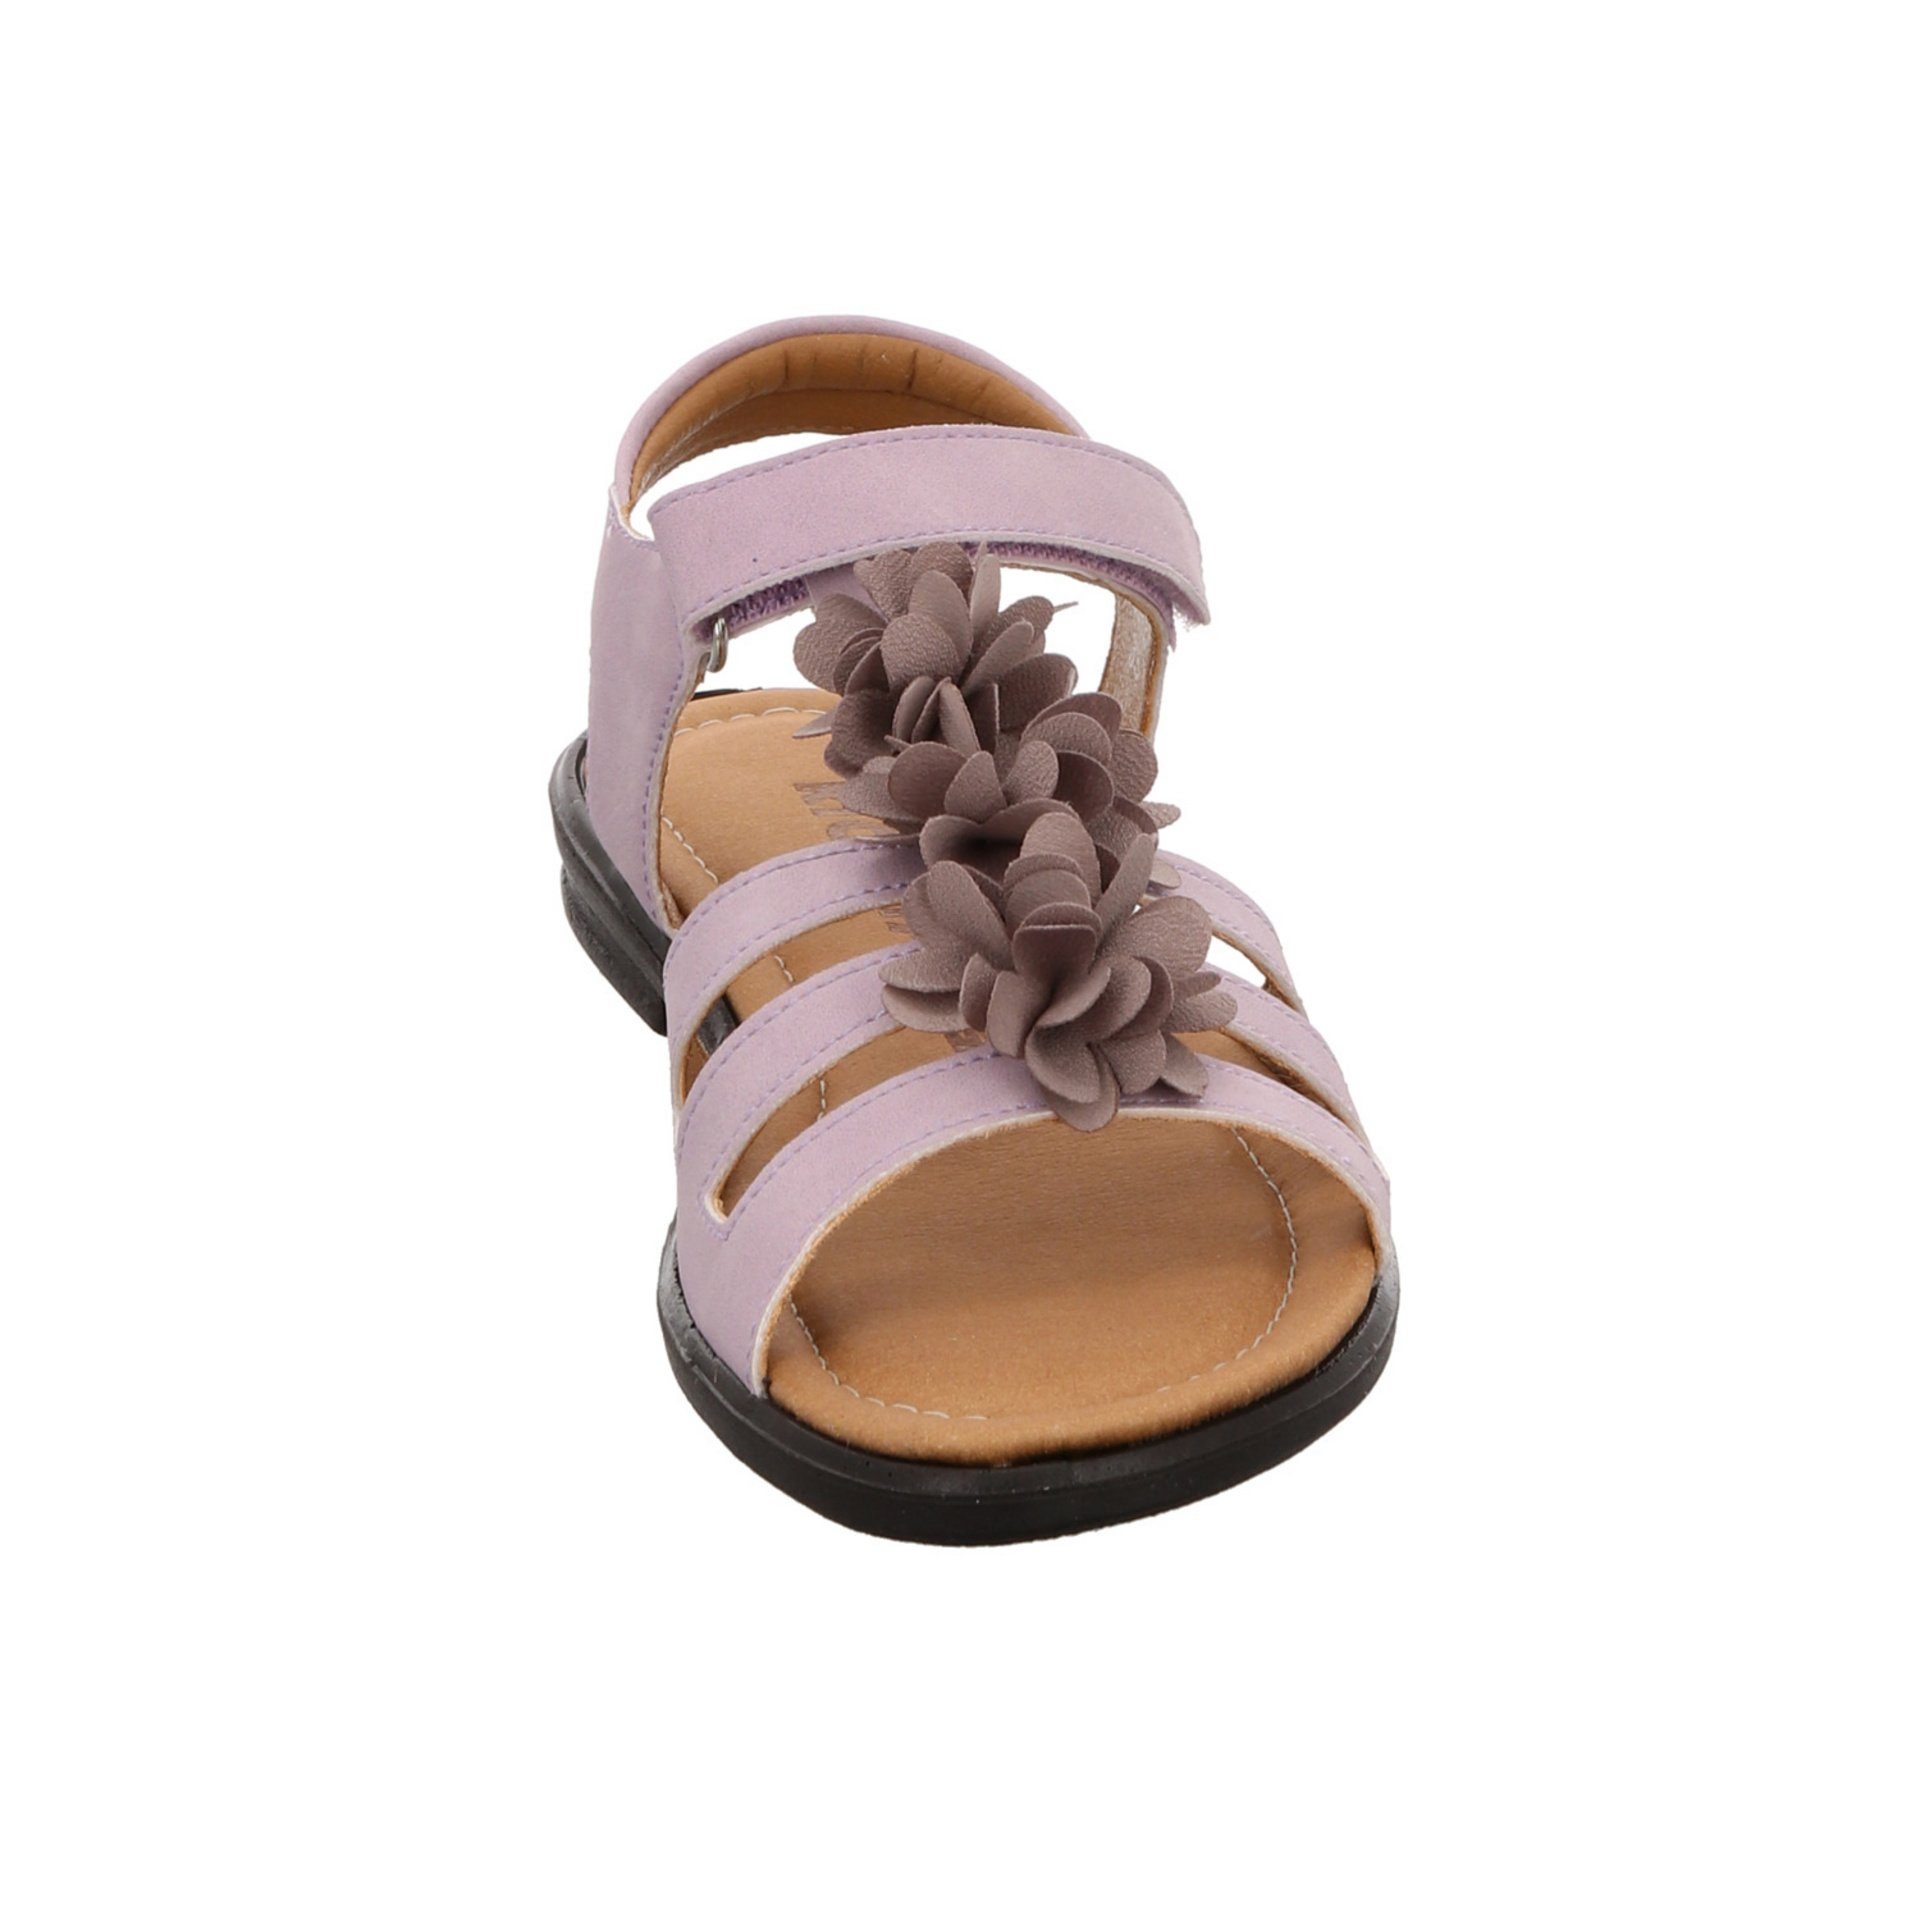 Schuhe Ricosta Aurora Sandale Sandale Synthetik hell rot+lila Sandalen Mädchen